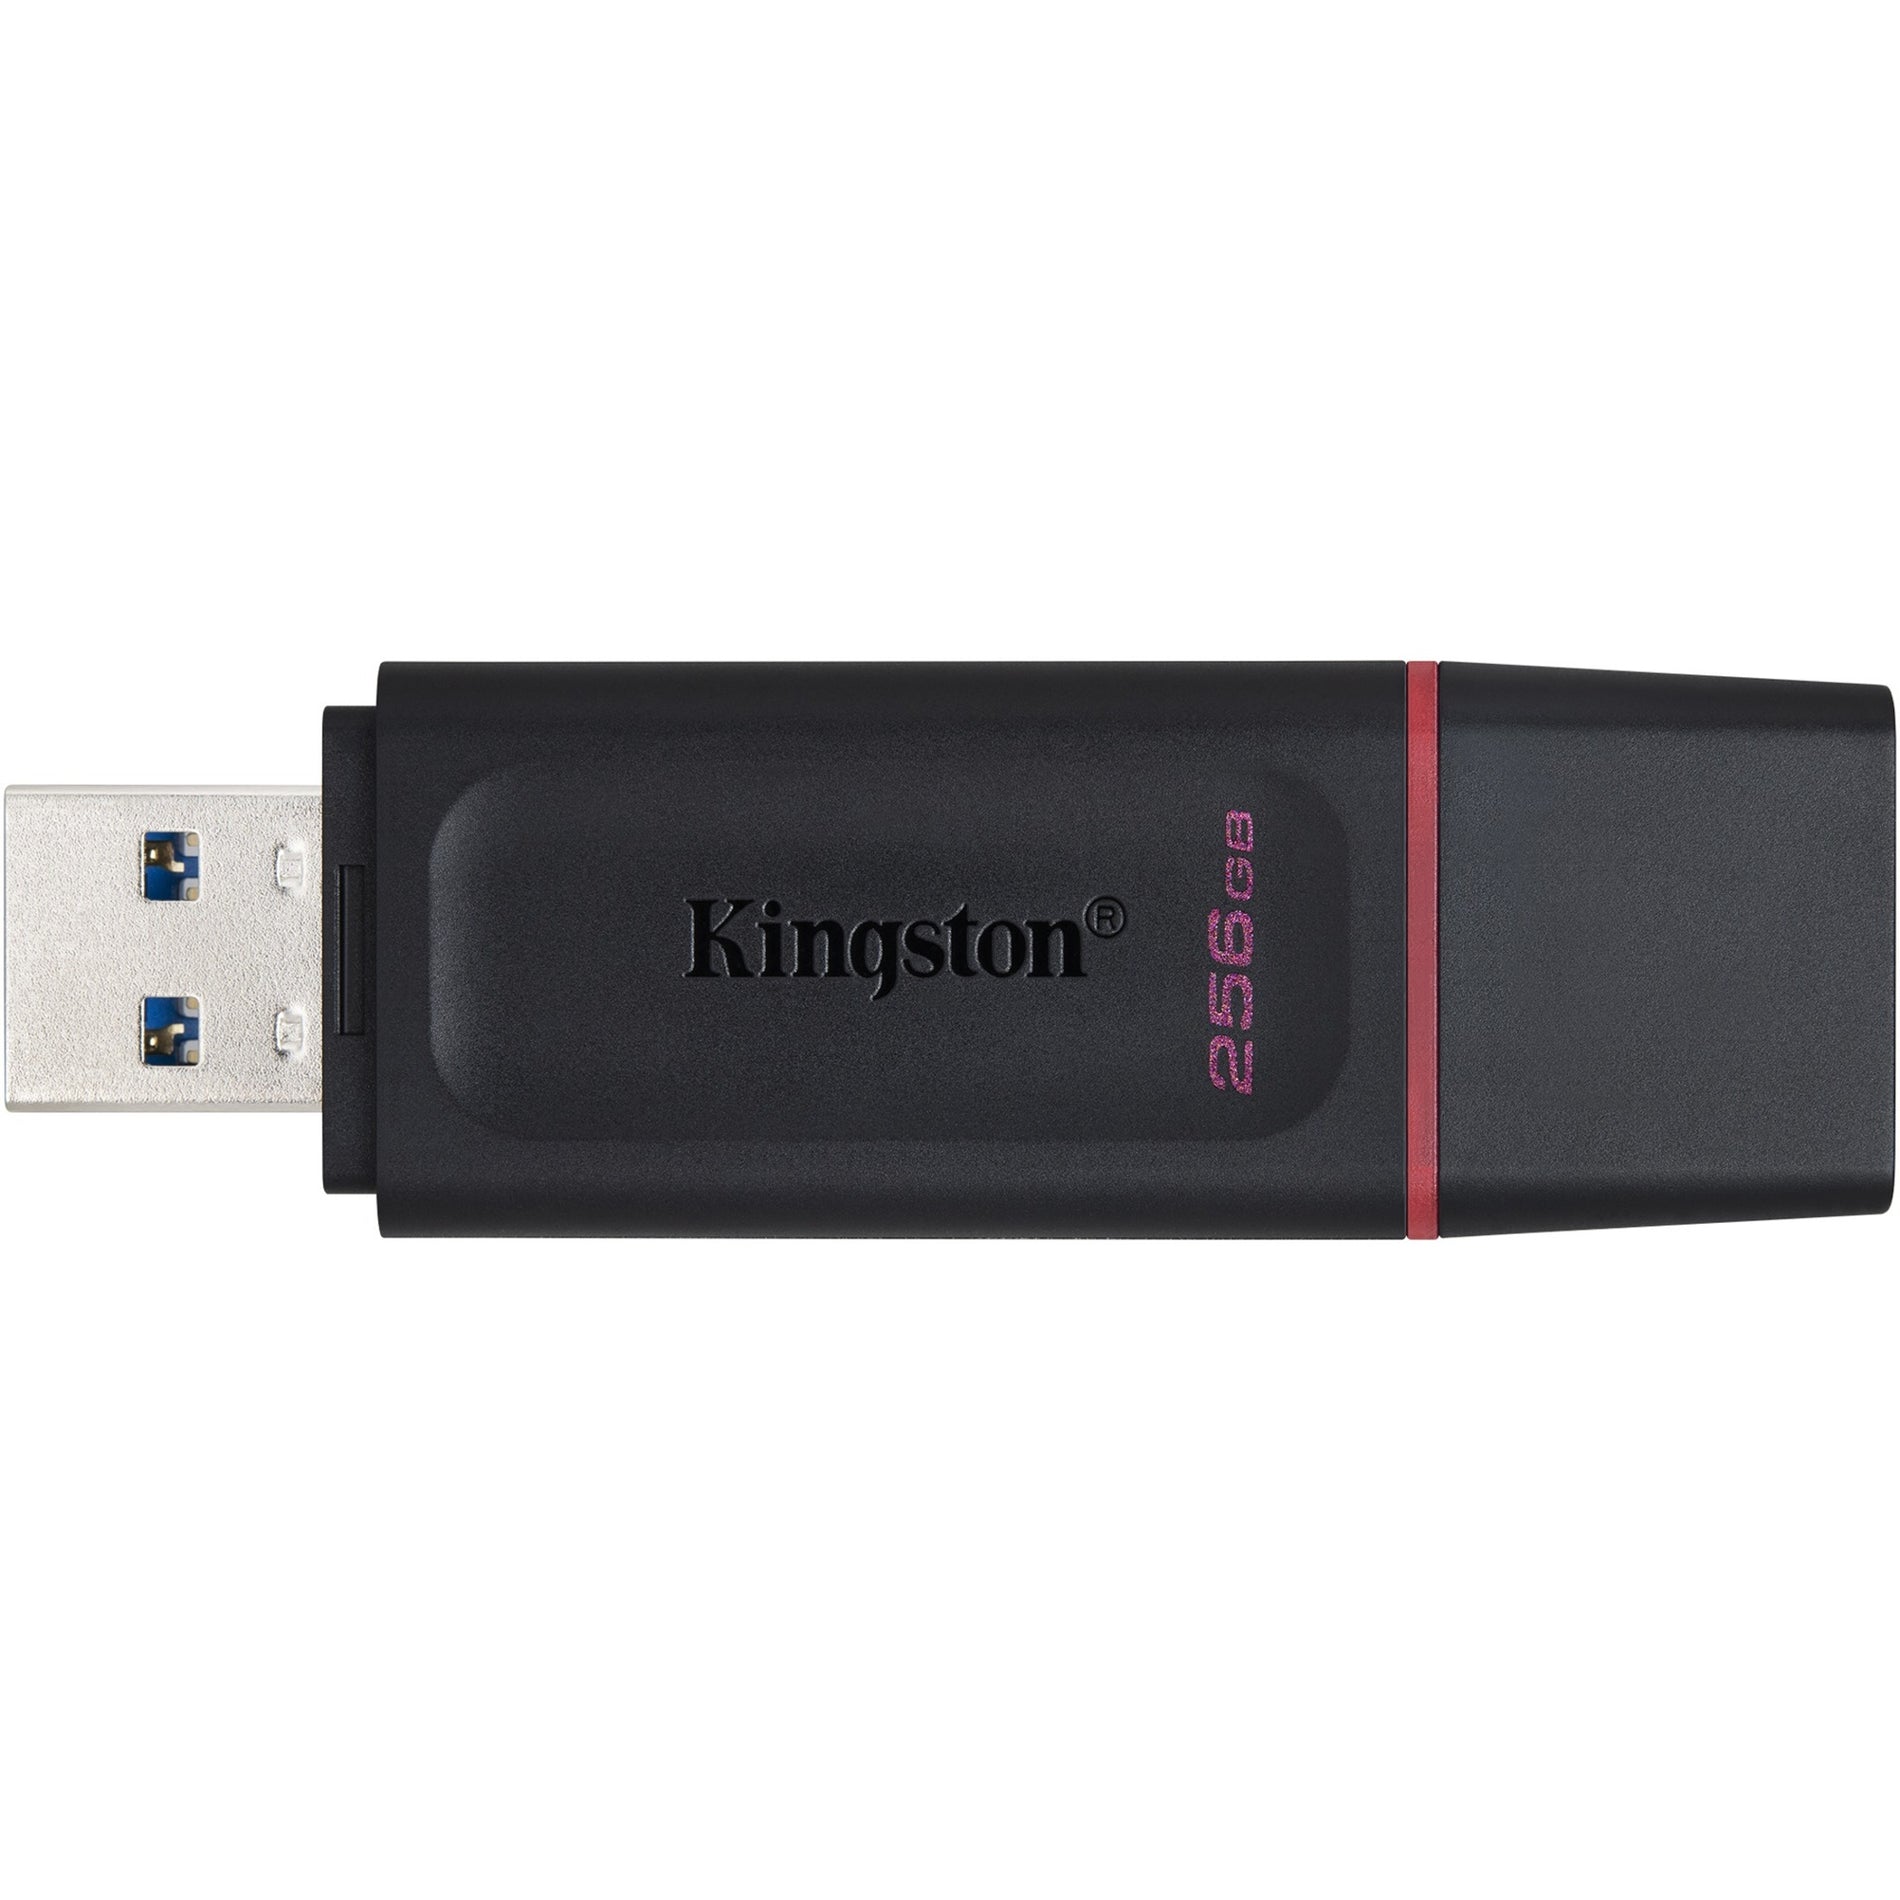 Kingston DTX/256GB DataTraveler Exodia 256GB USB 3.2 (Gen 1) Flash Drive, Lightweight, Key Ring, Protective Cap